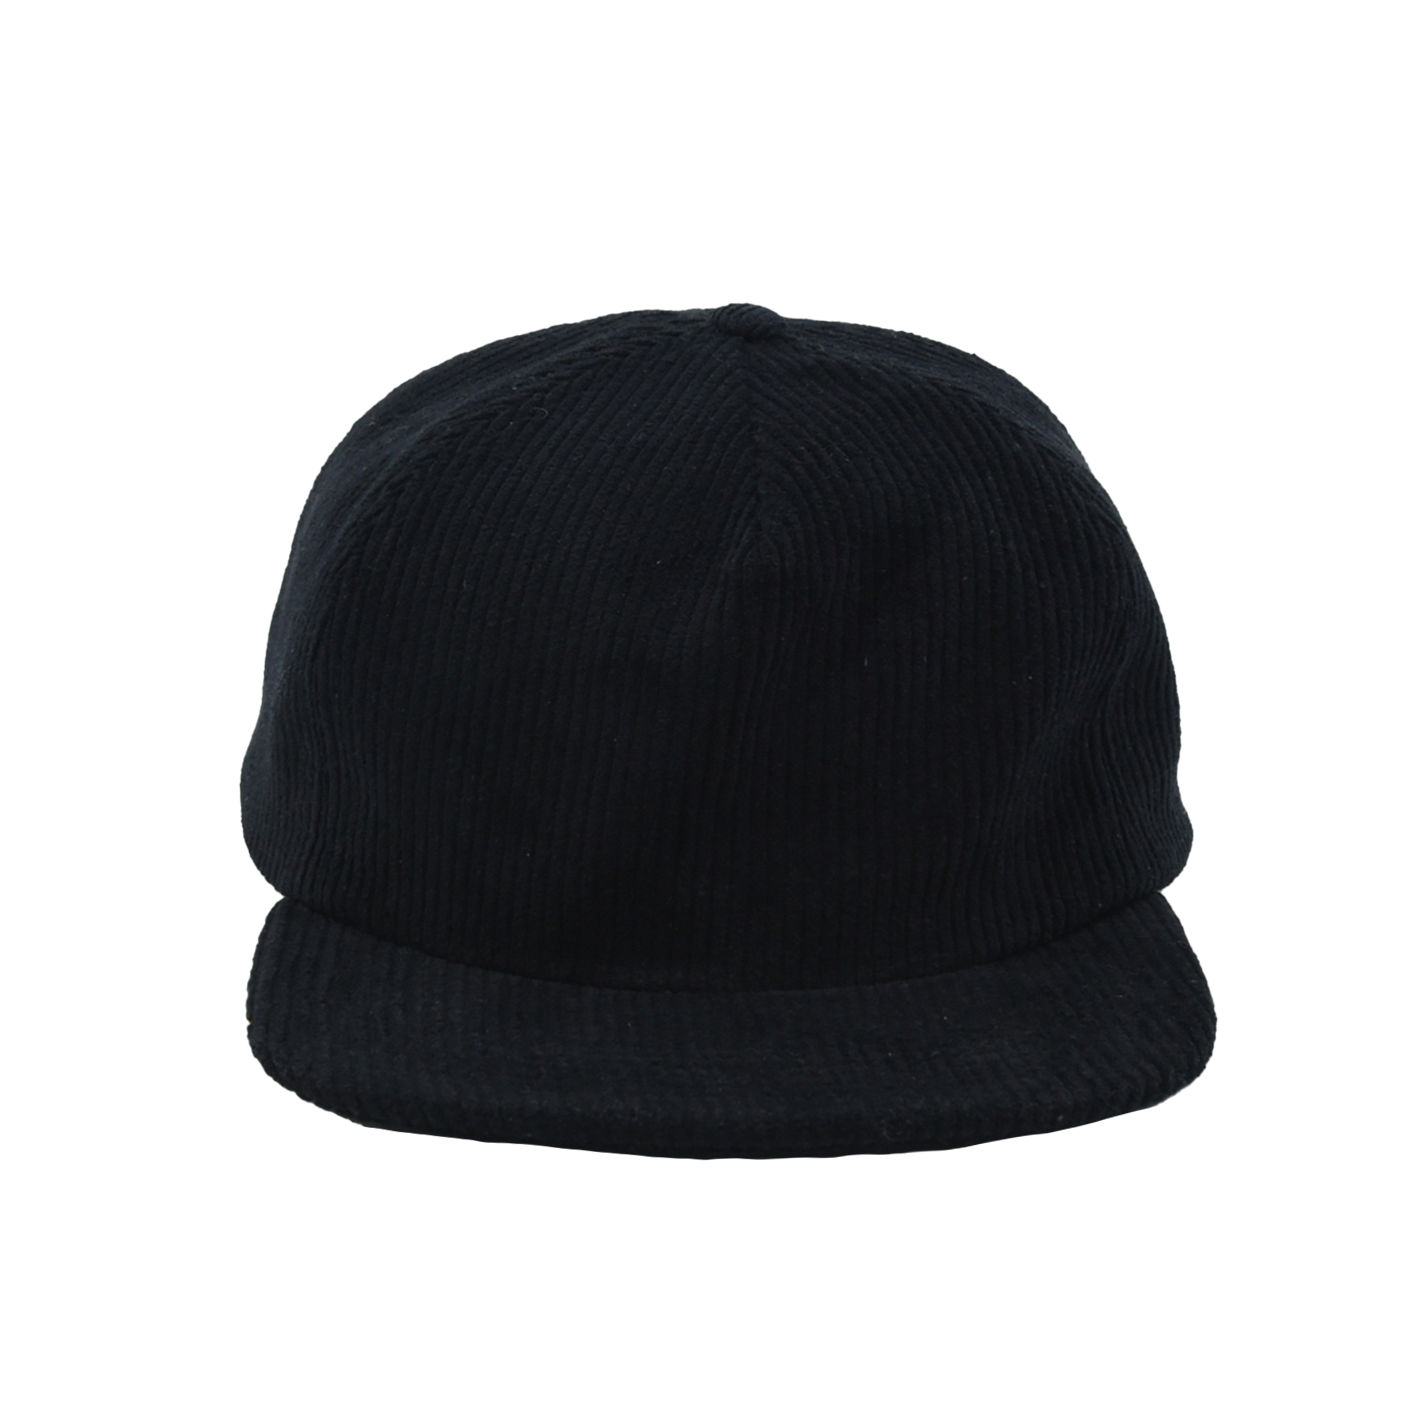 Black Corduroy Snapback Hat - Front only image. - Blank- No Logo